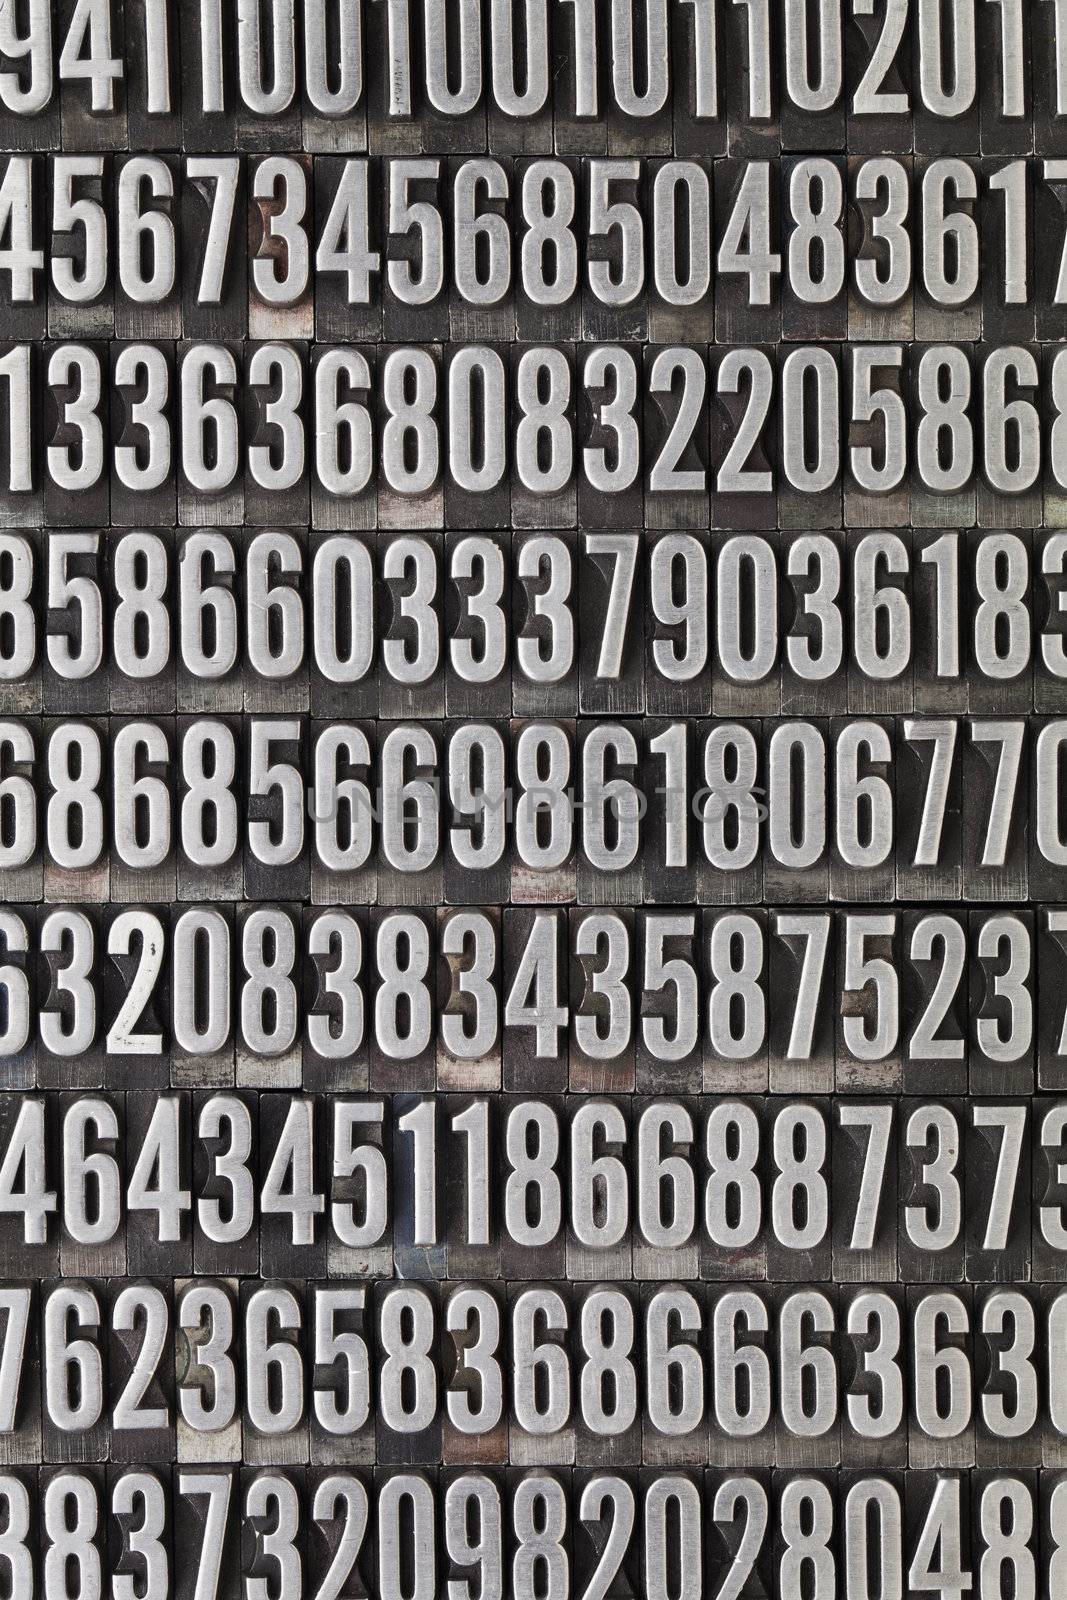 random numbers background by PixelsAway